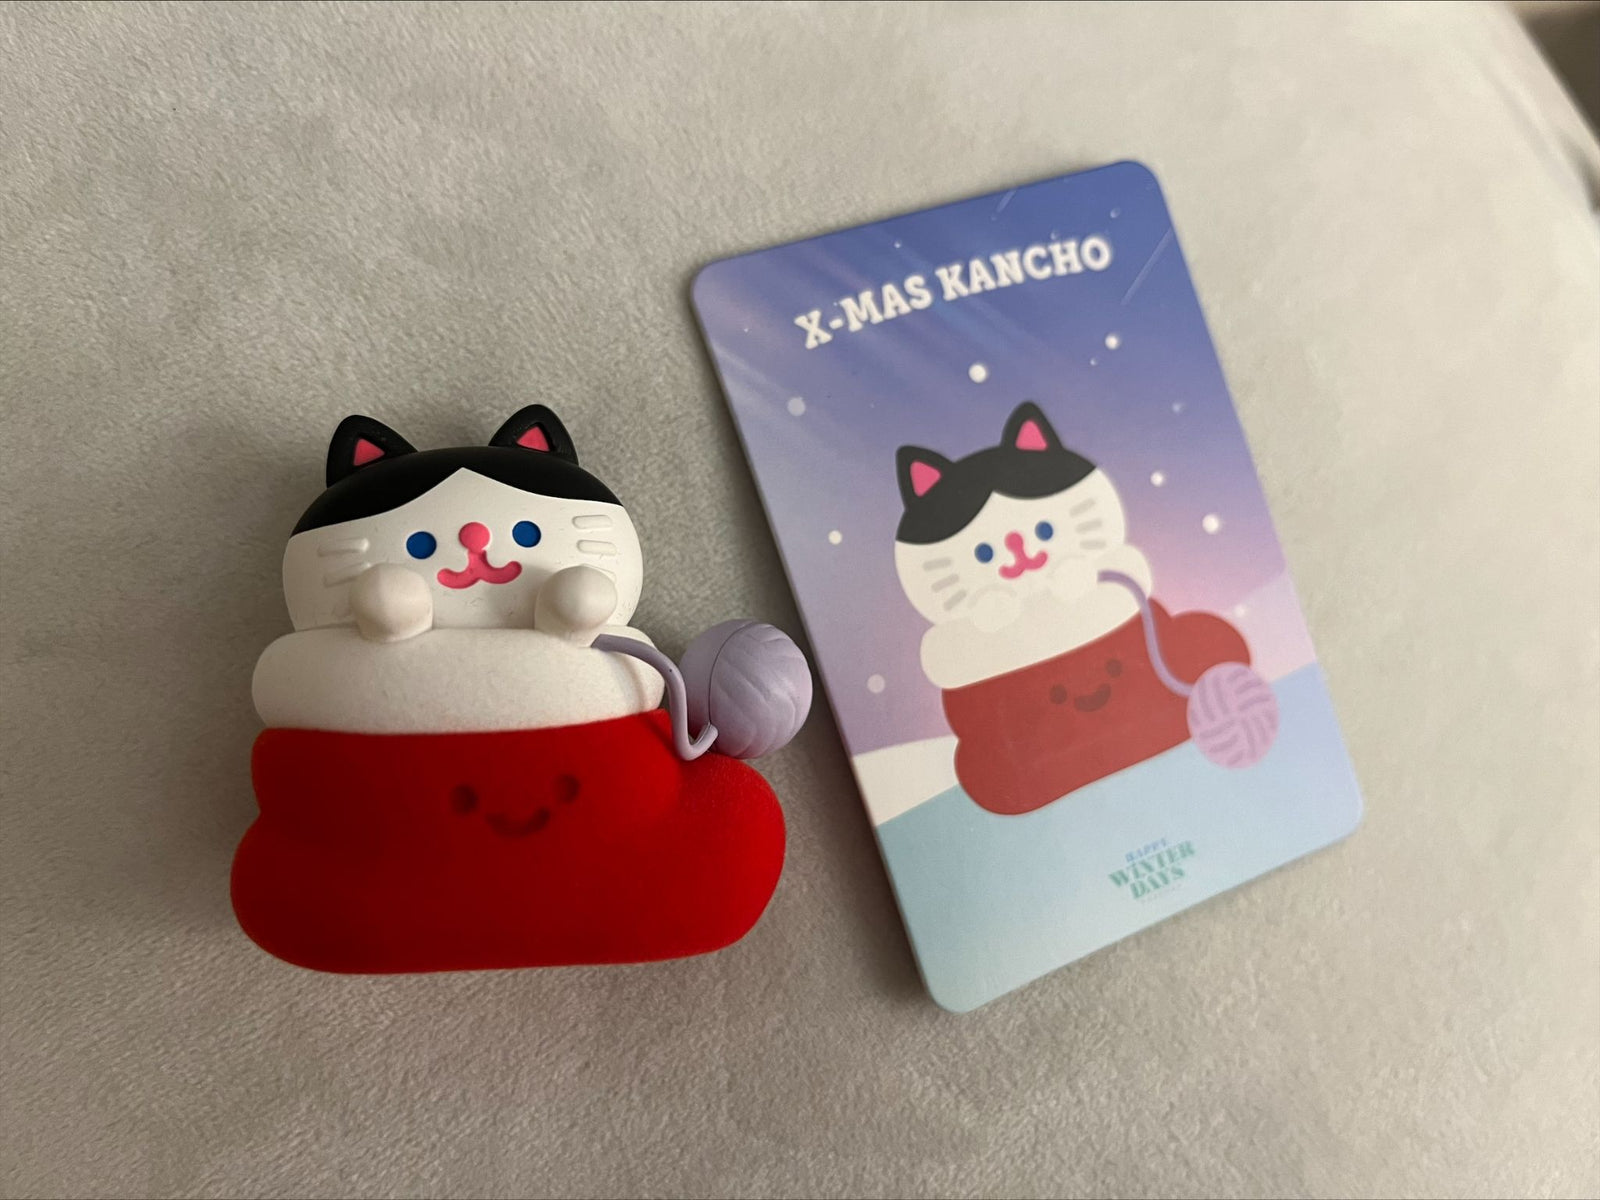 X-Mas Kancho - RiCO Happy Winter Days Blind Box Series by Rico x Finding Unicorn - 1